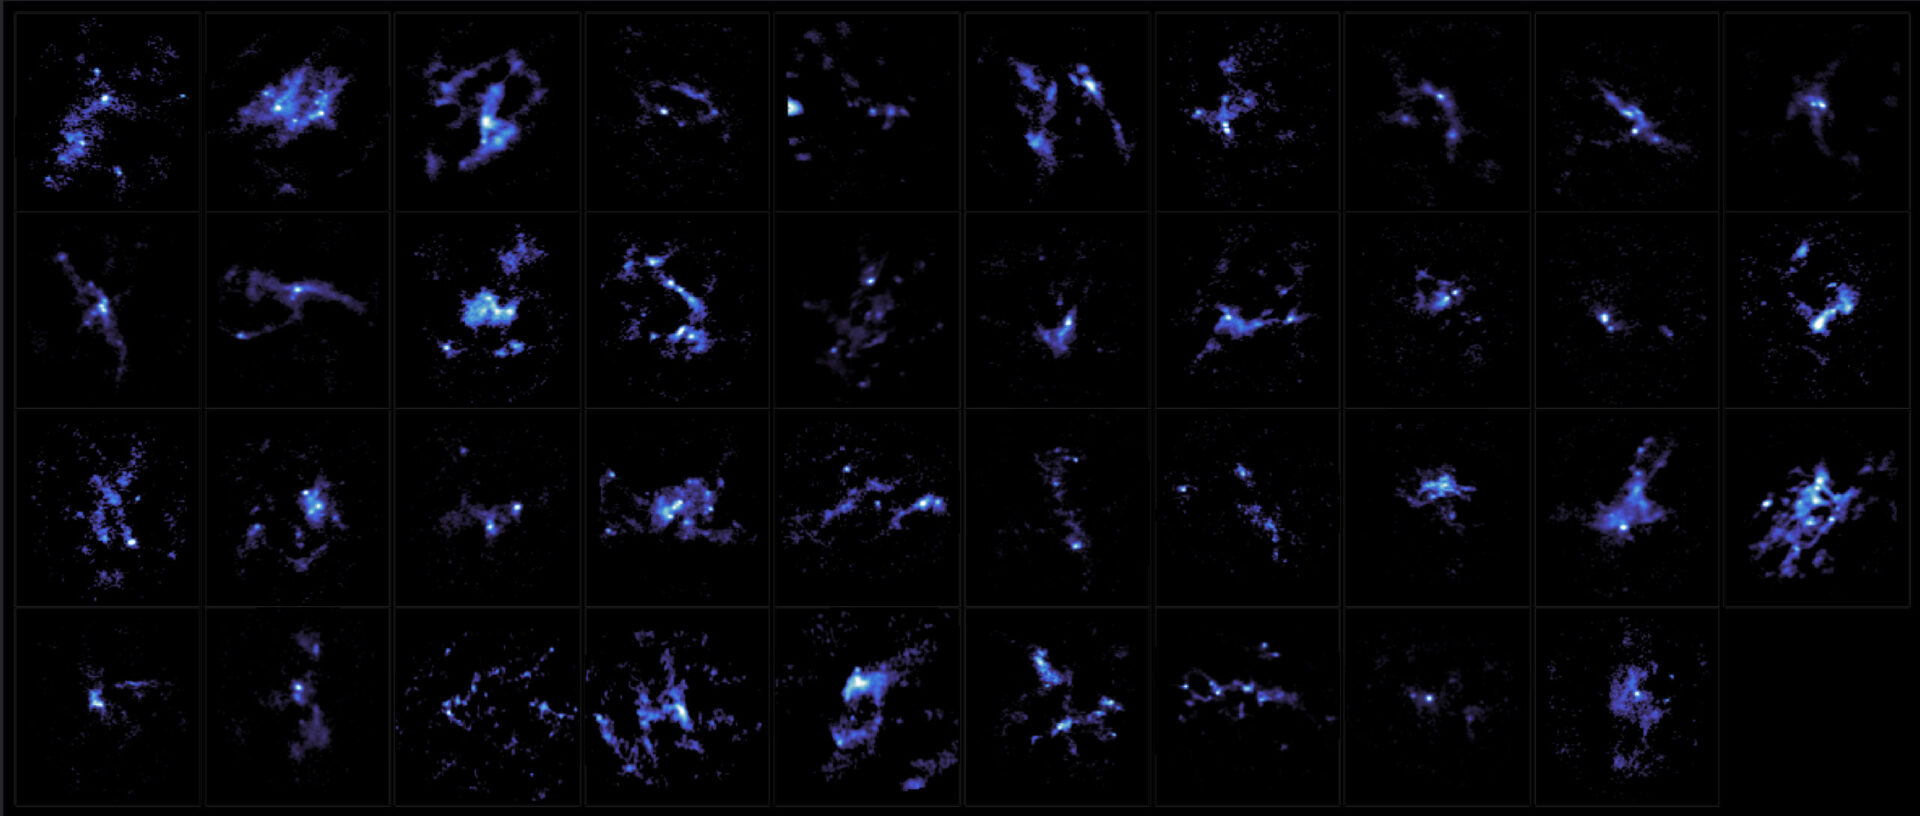 Dust emission map for thirty-nine targets. Credit: ALMA (ESO/NAOJ/NRAO), K. Morii et al.